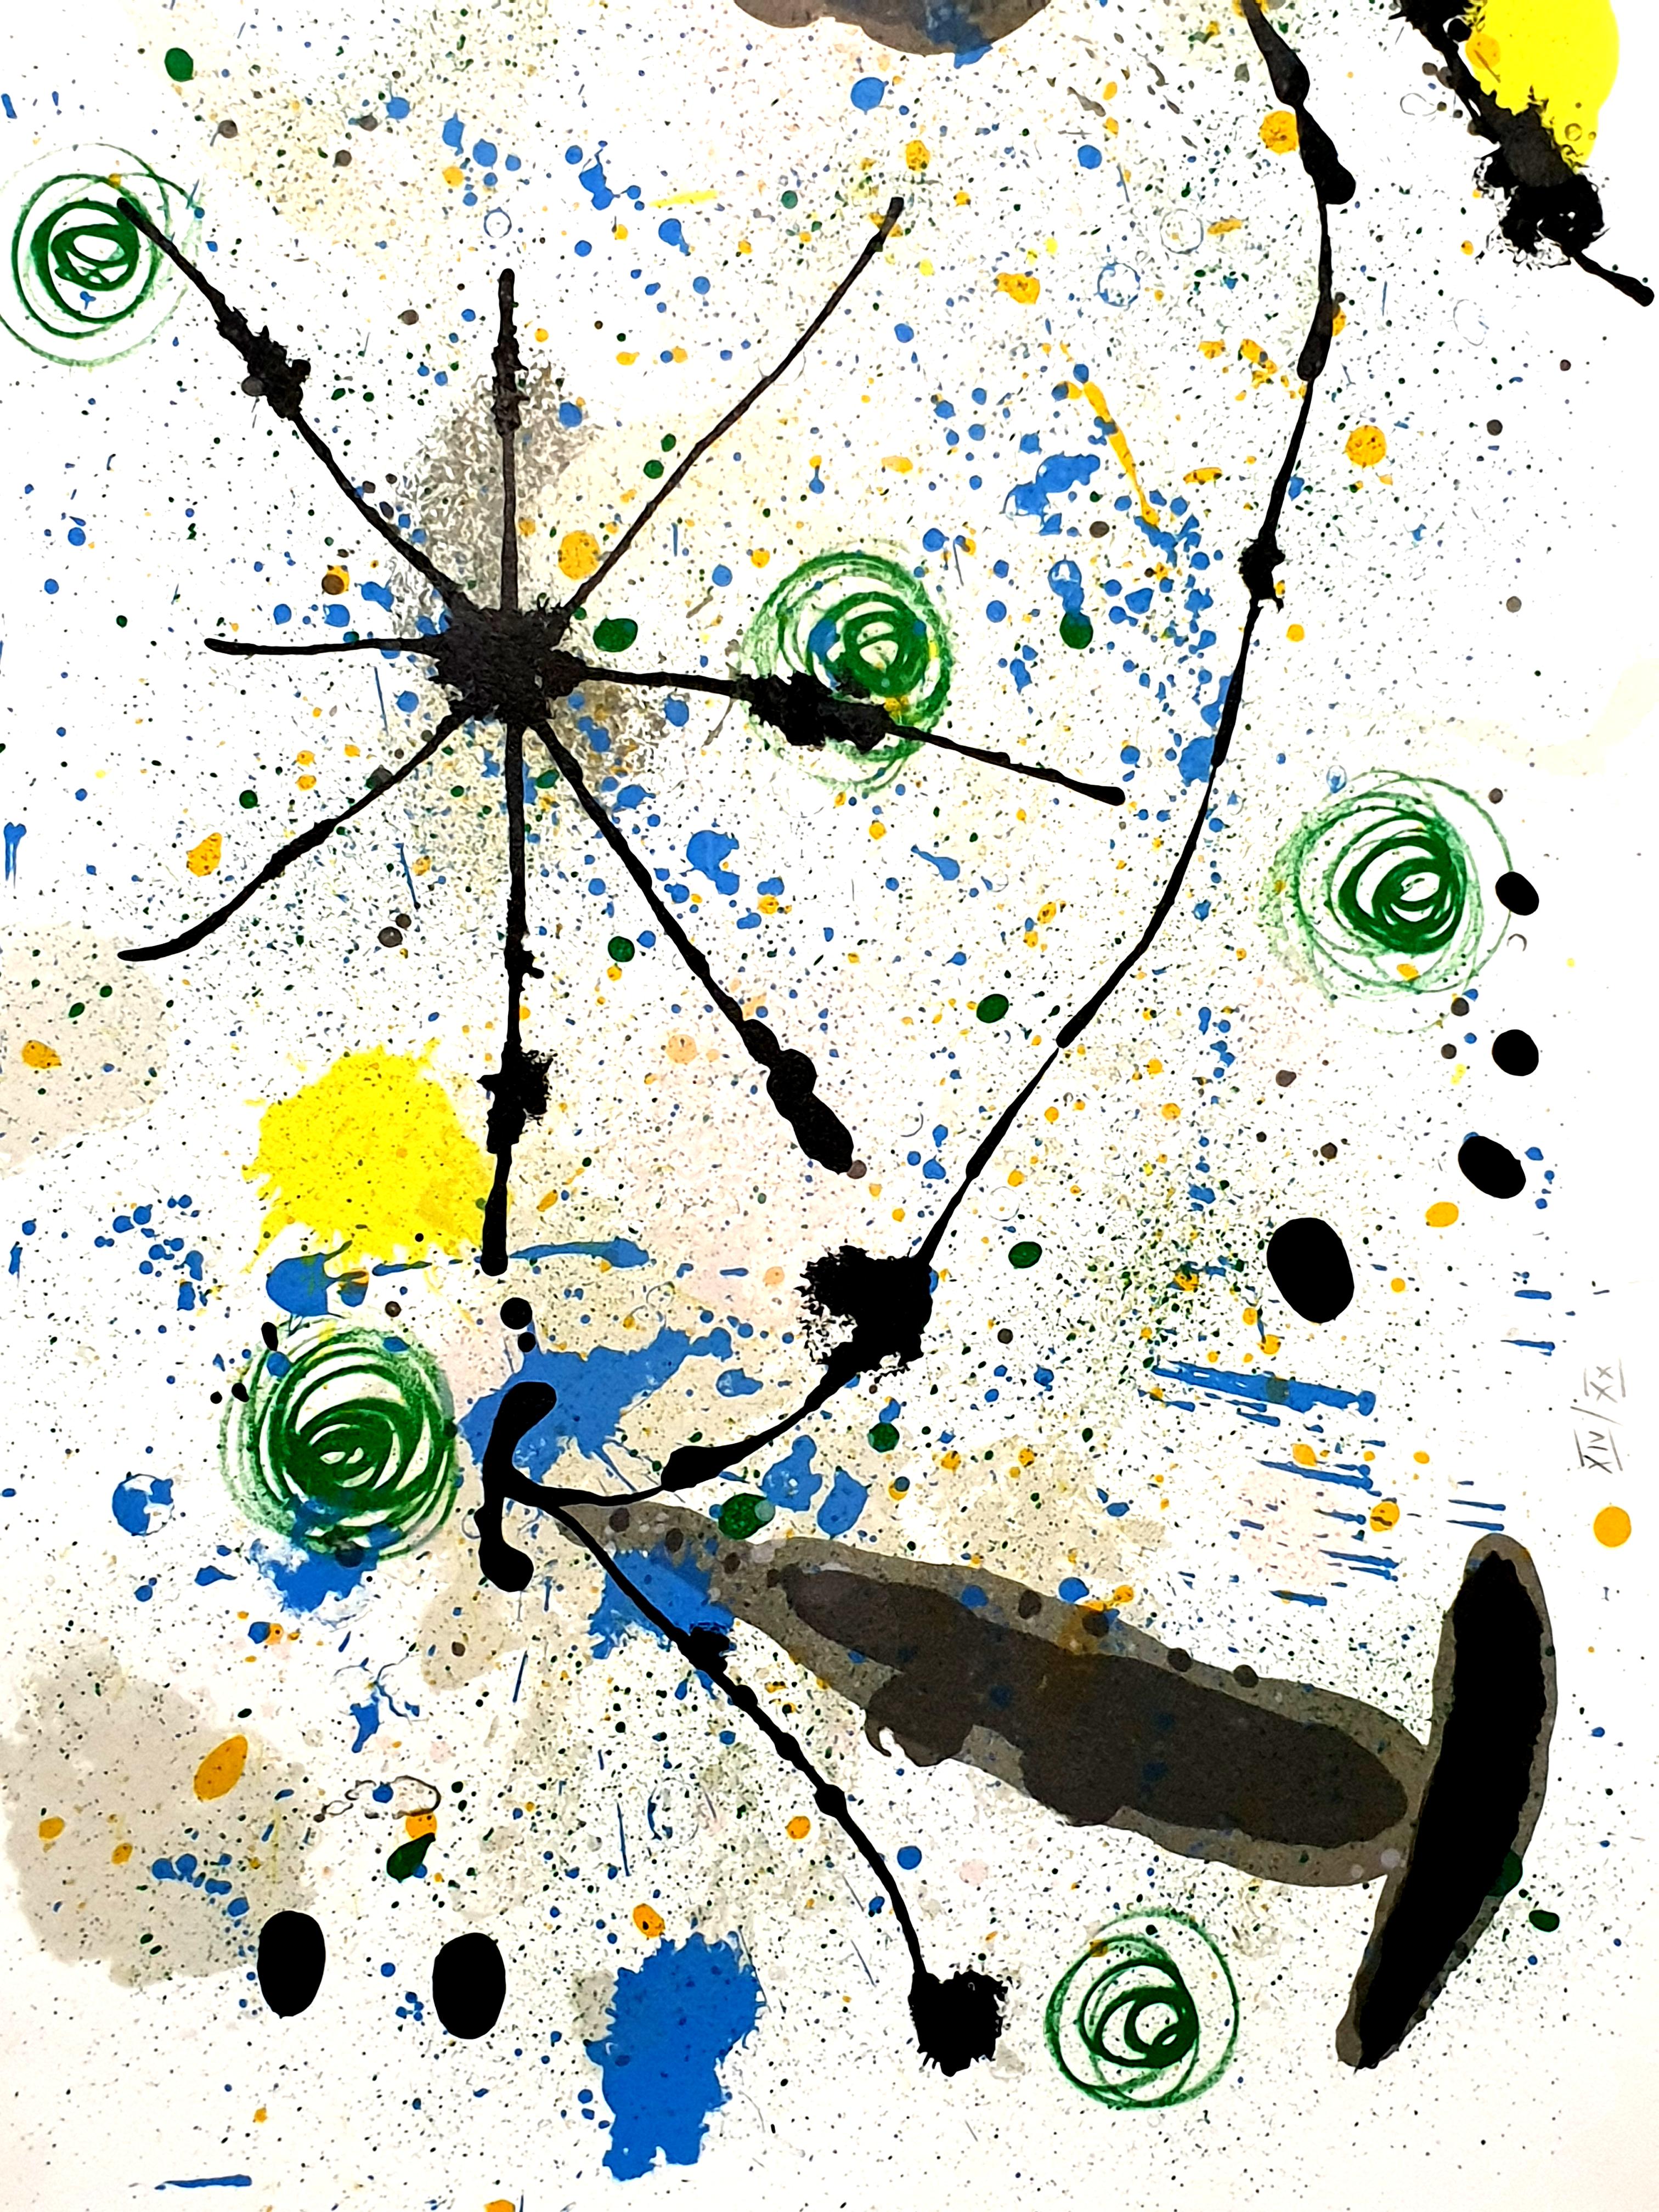 Joan Miro - Plate 8, from Lézard aux plumes d'or - Print by Joan Miró